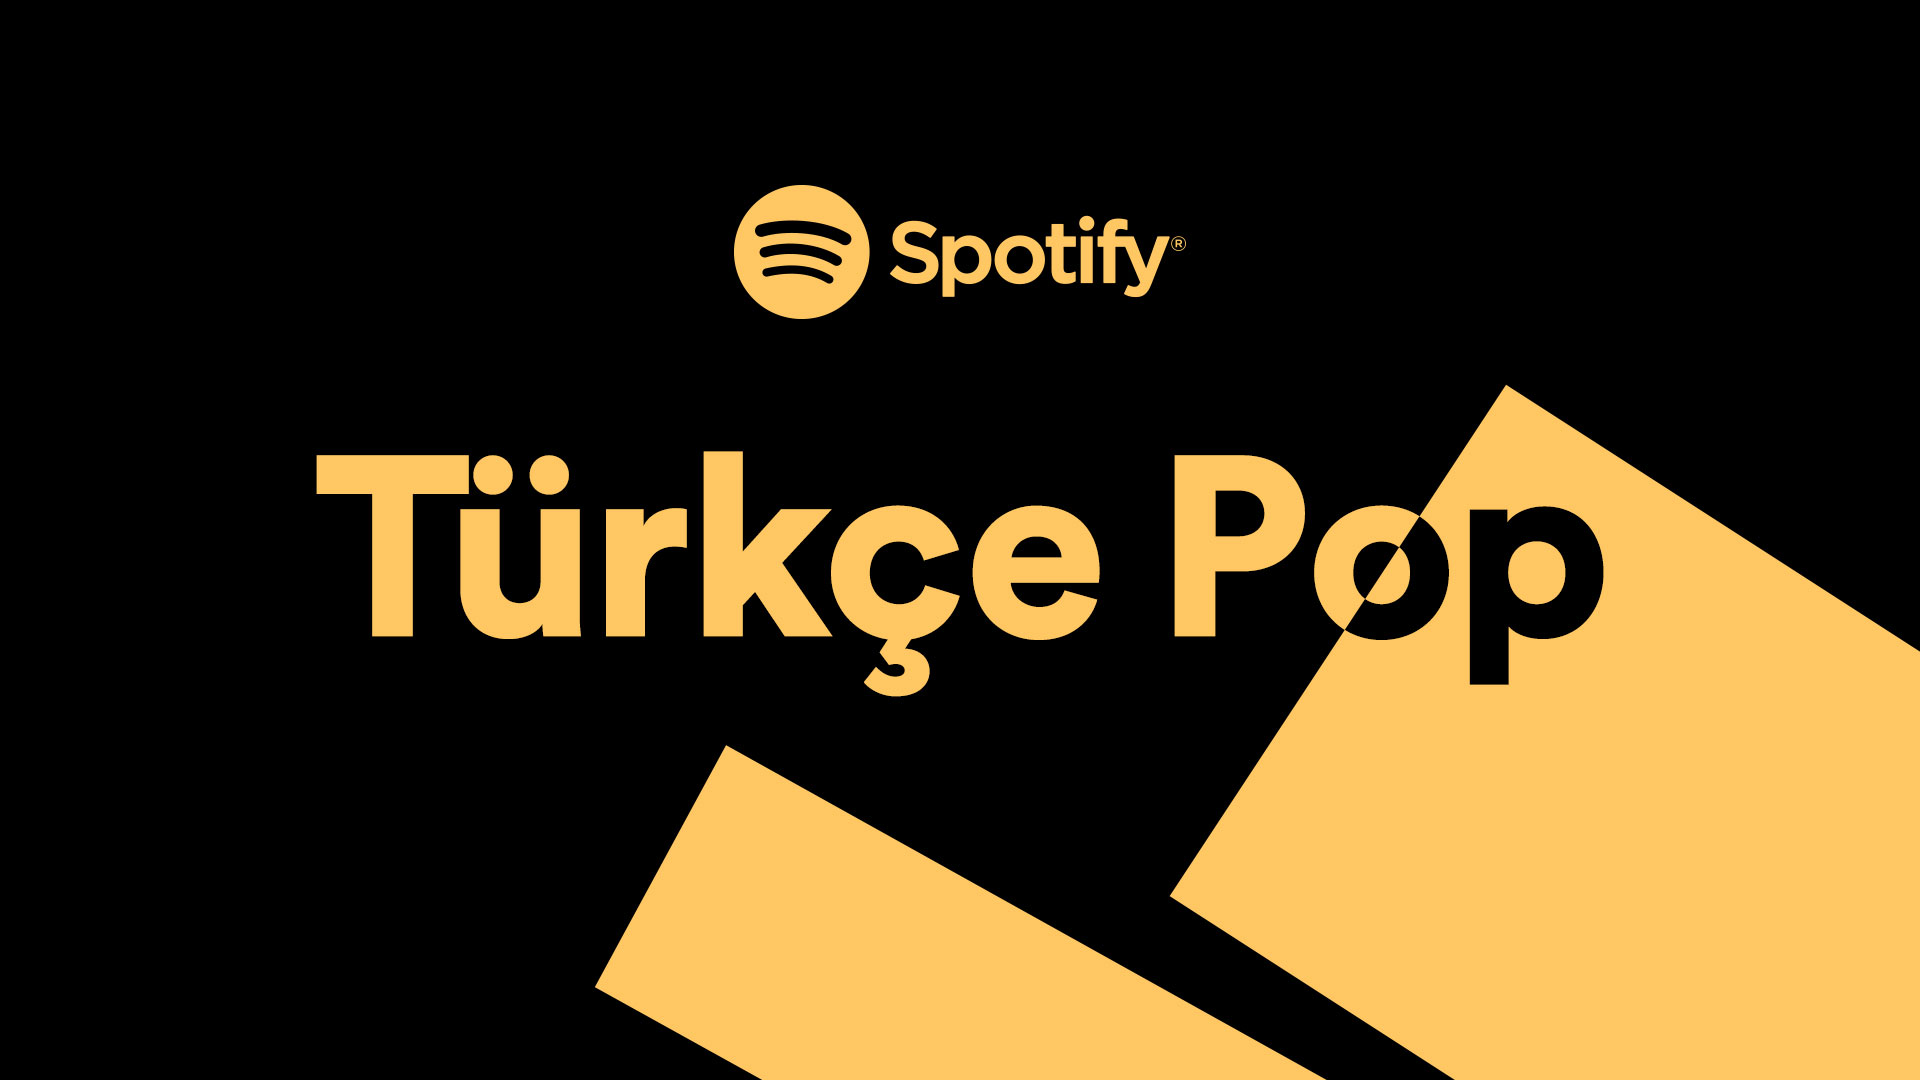 Spotify Türkçe Pop